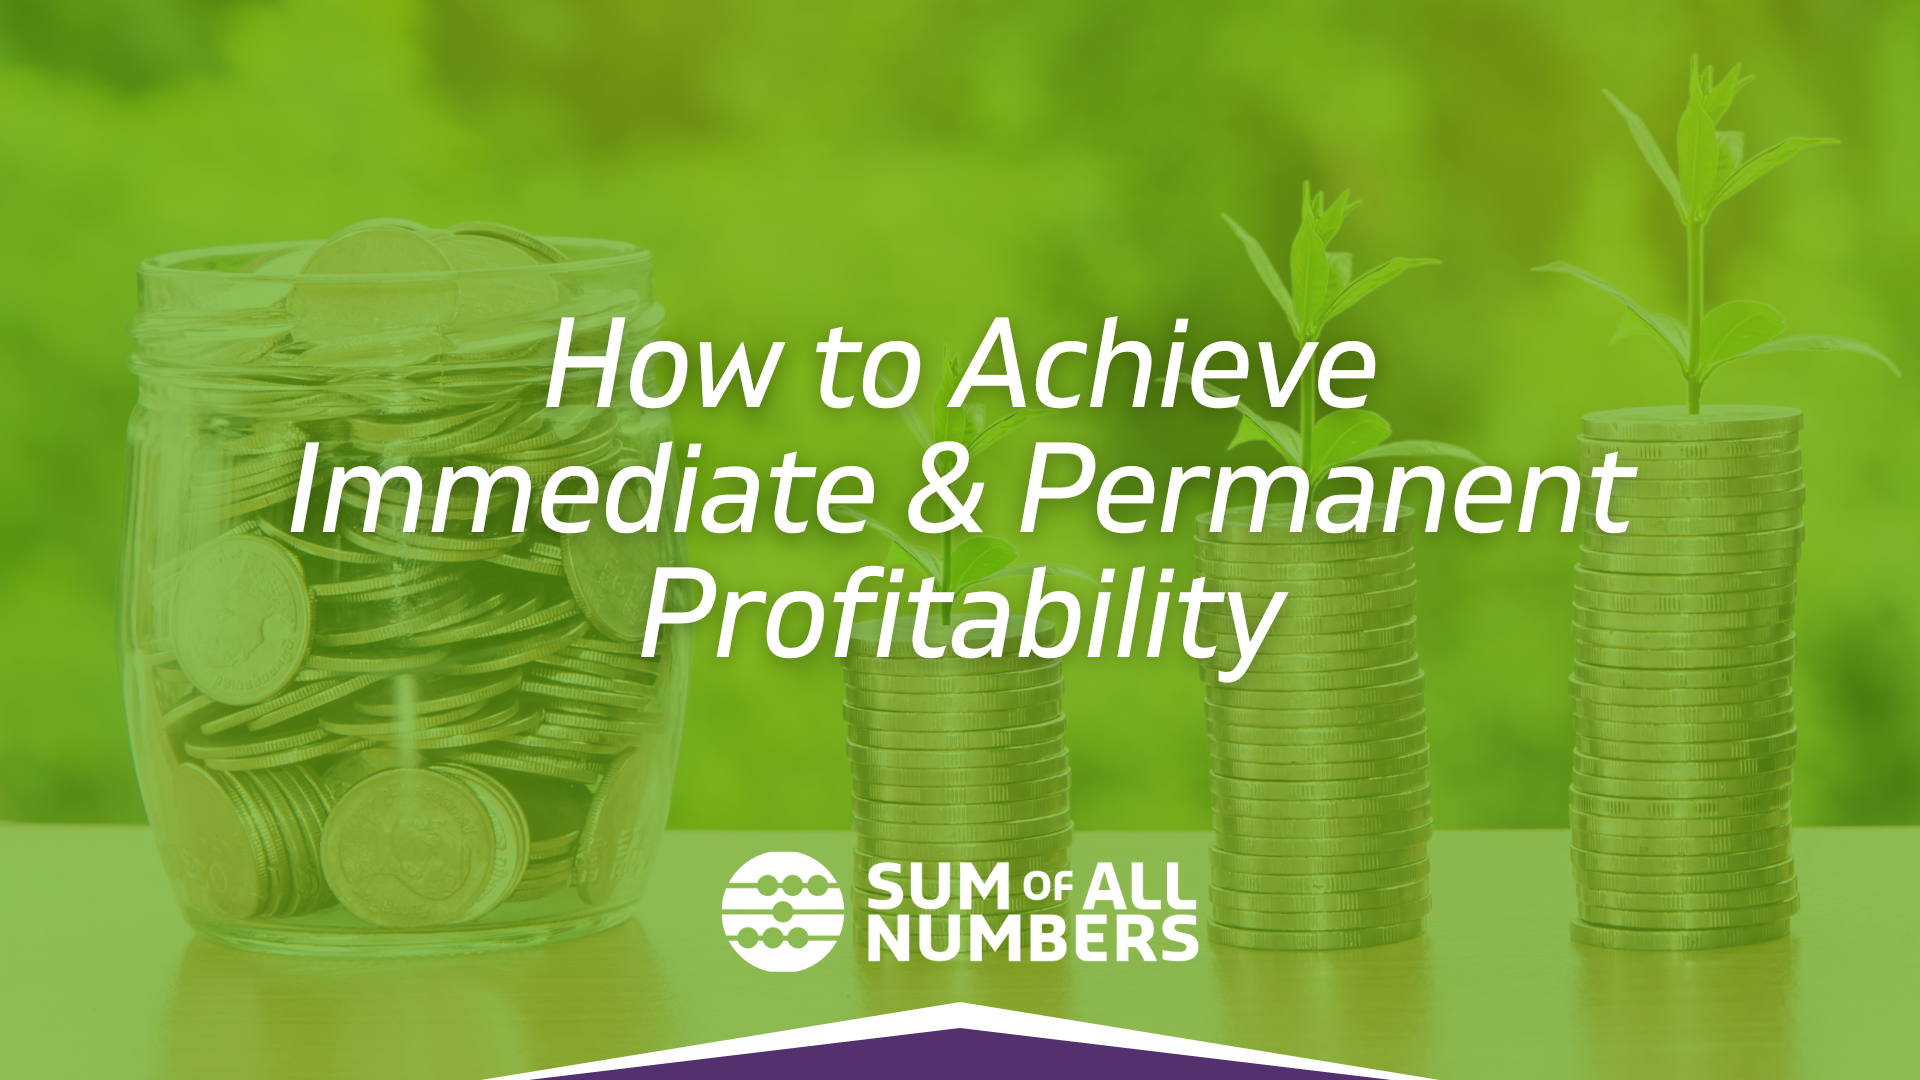 How to Achieve Immediate & Permanent Profitability